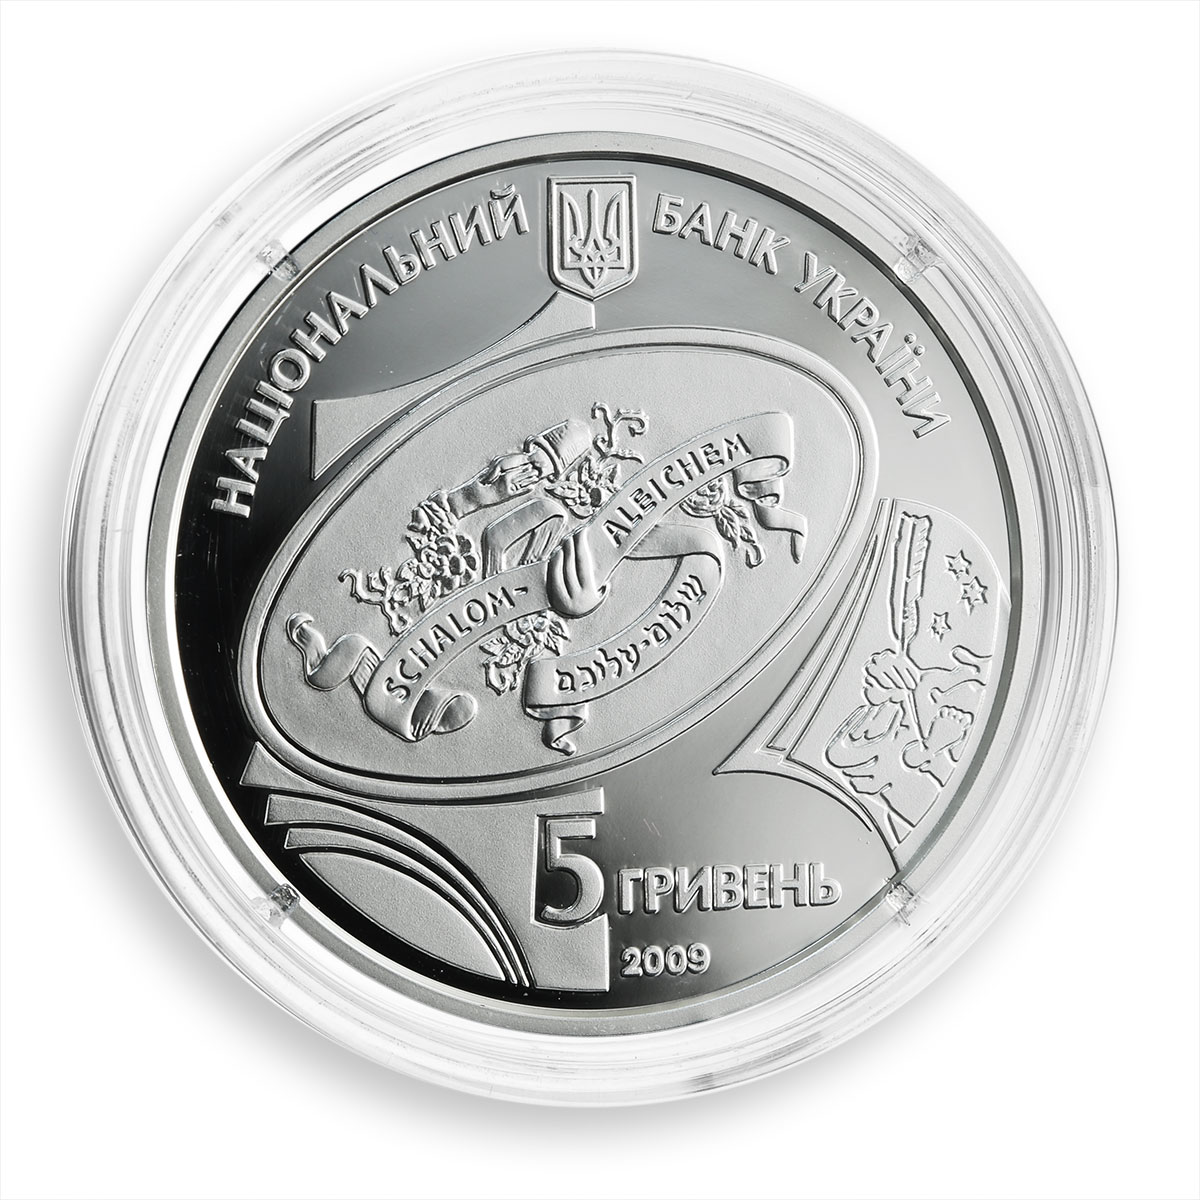 Ukraine 5 hryvnia Sholem Aleichem Playwrigh Yiddish Literature silver coin 2009